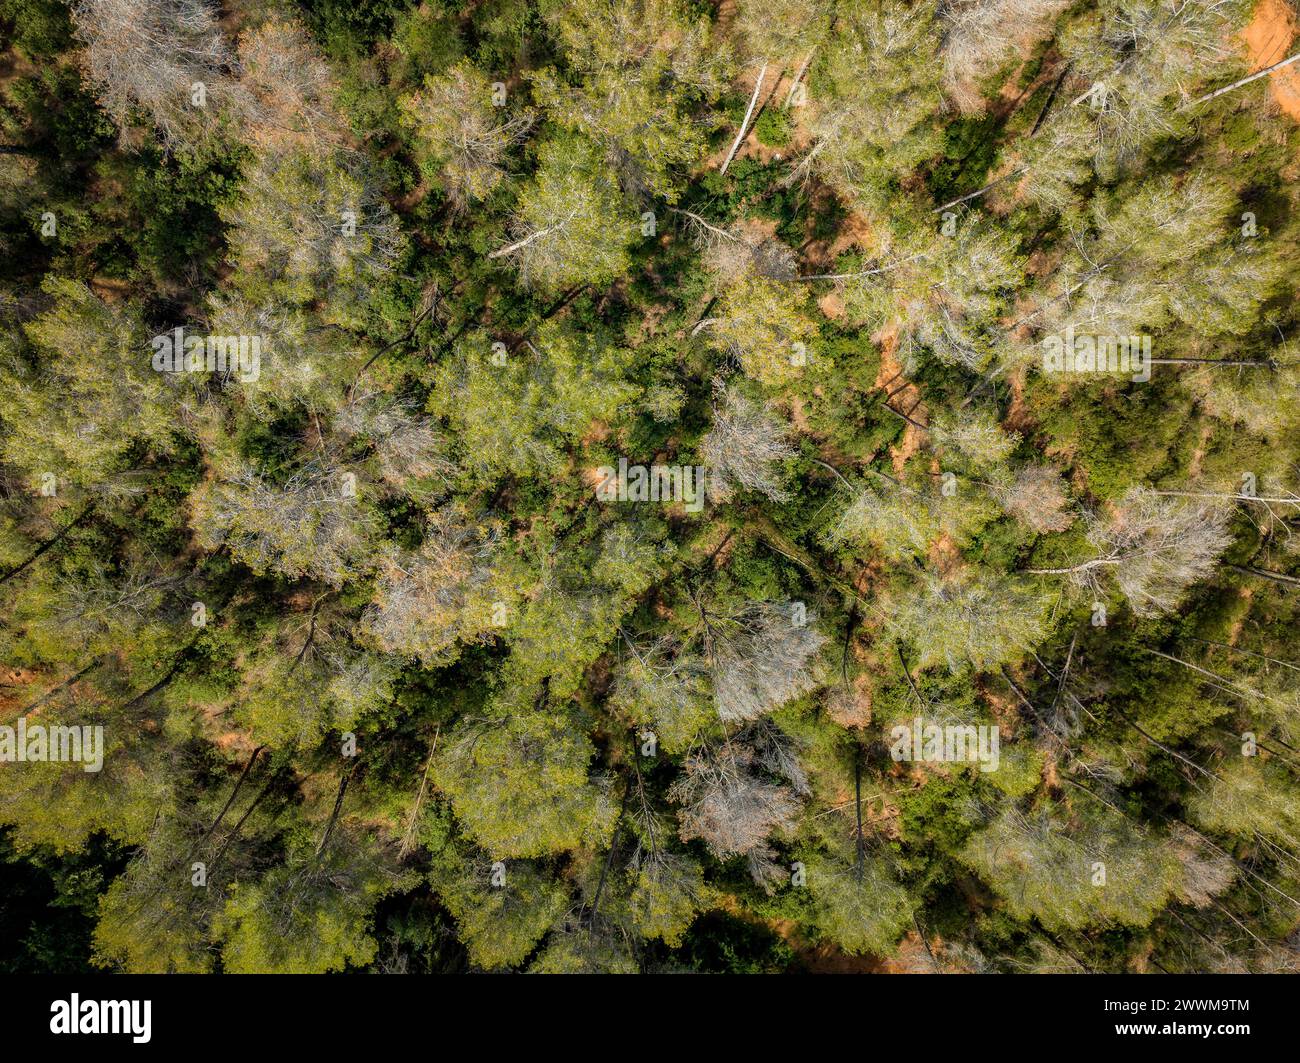 Aleppo pine forest with leaf loss due to drought in the hills near Castellbisbal (Barcelona, Catalonia, Spain) ESP: Bosque de pino carrasco, España Stock Photo